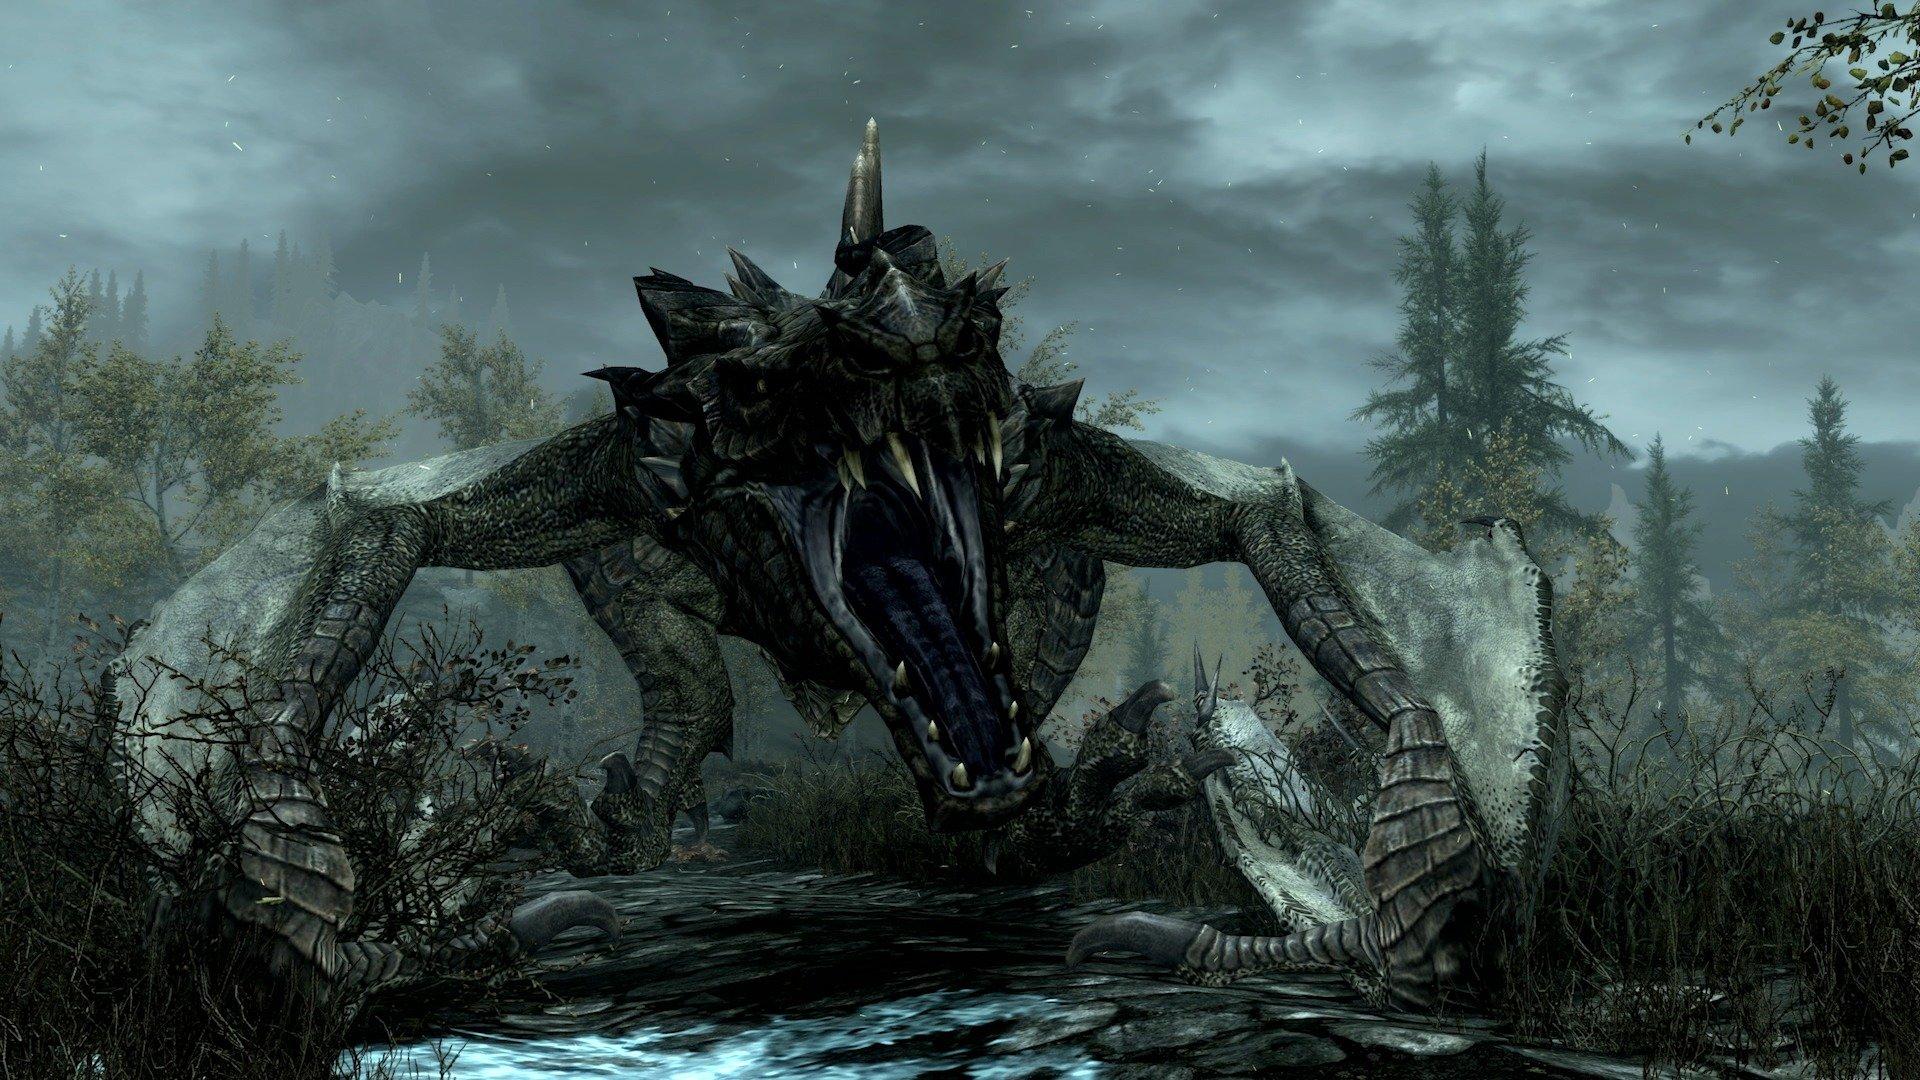 The Elder Scrolls V: Skyrim Anniversary Edition - PlayStation 4, PlayStation 4